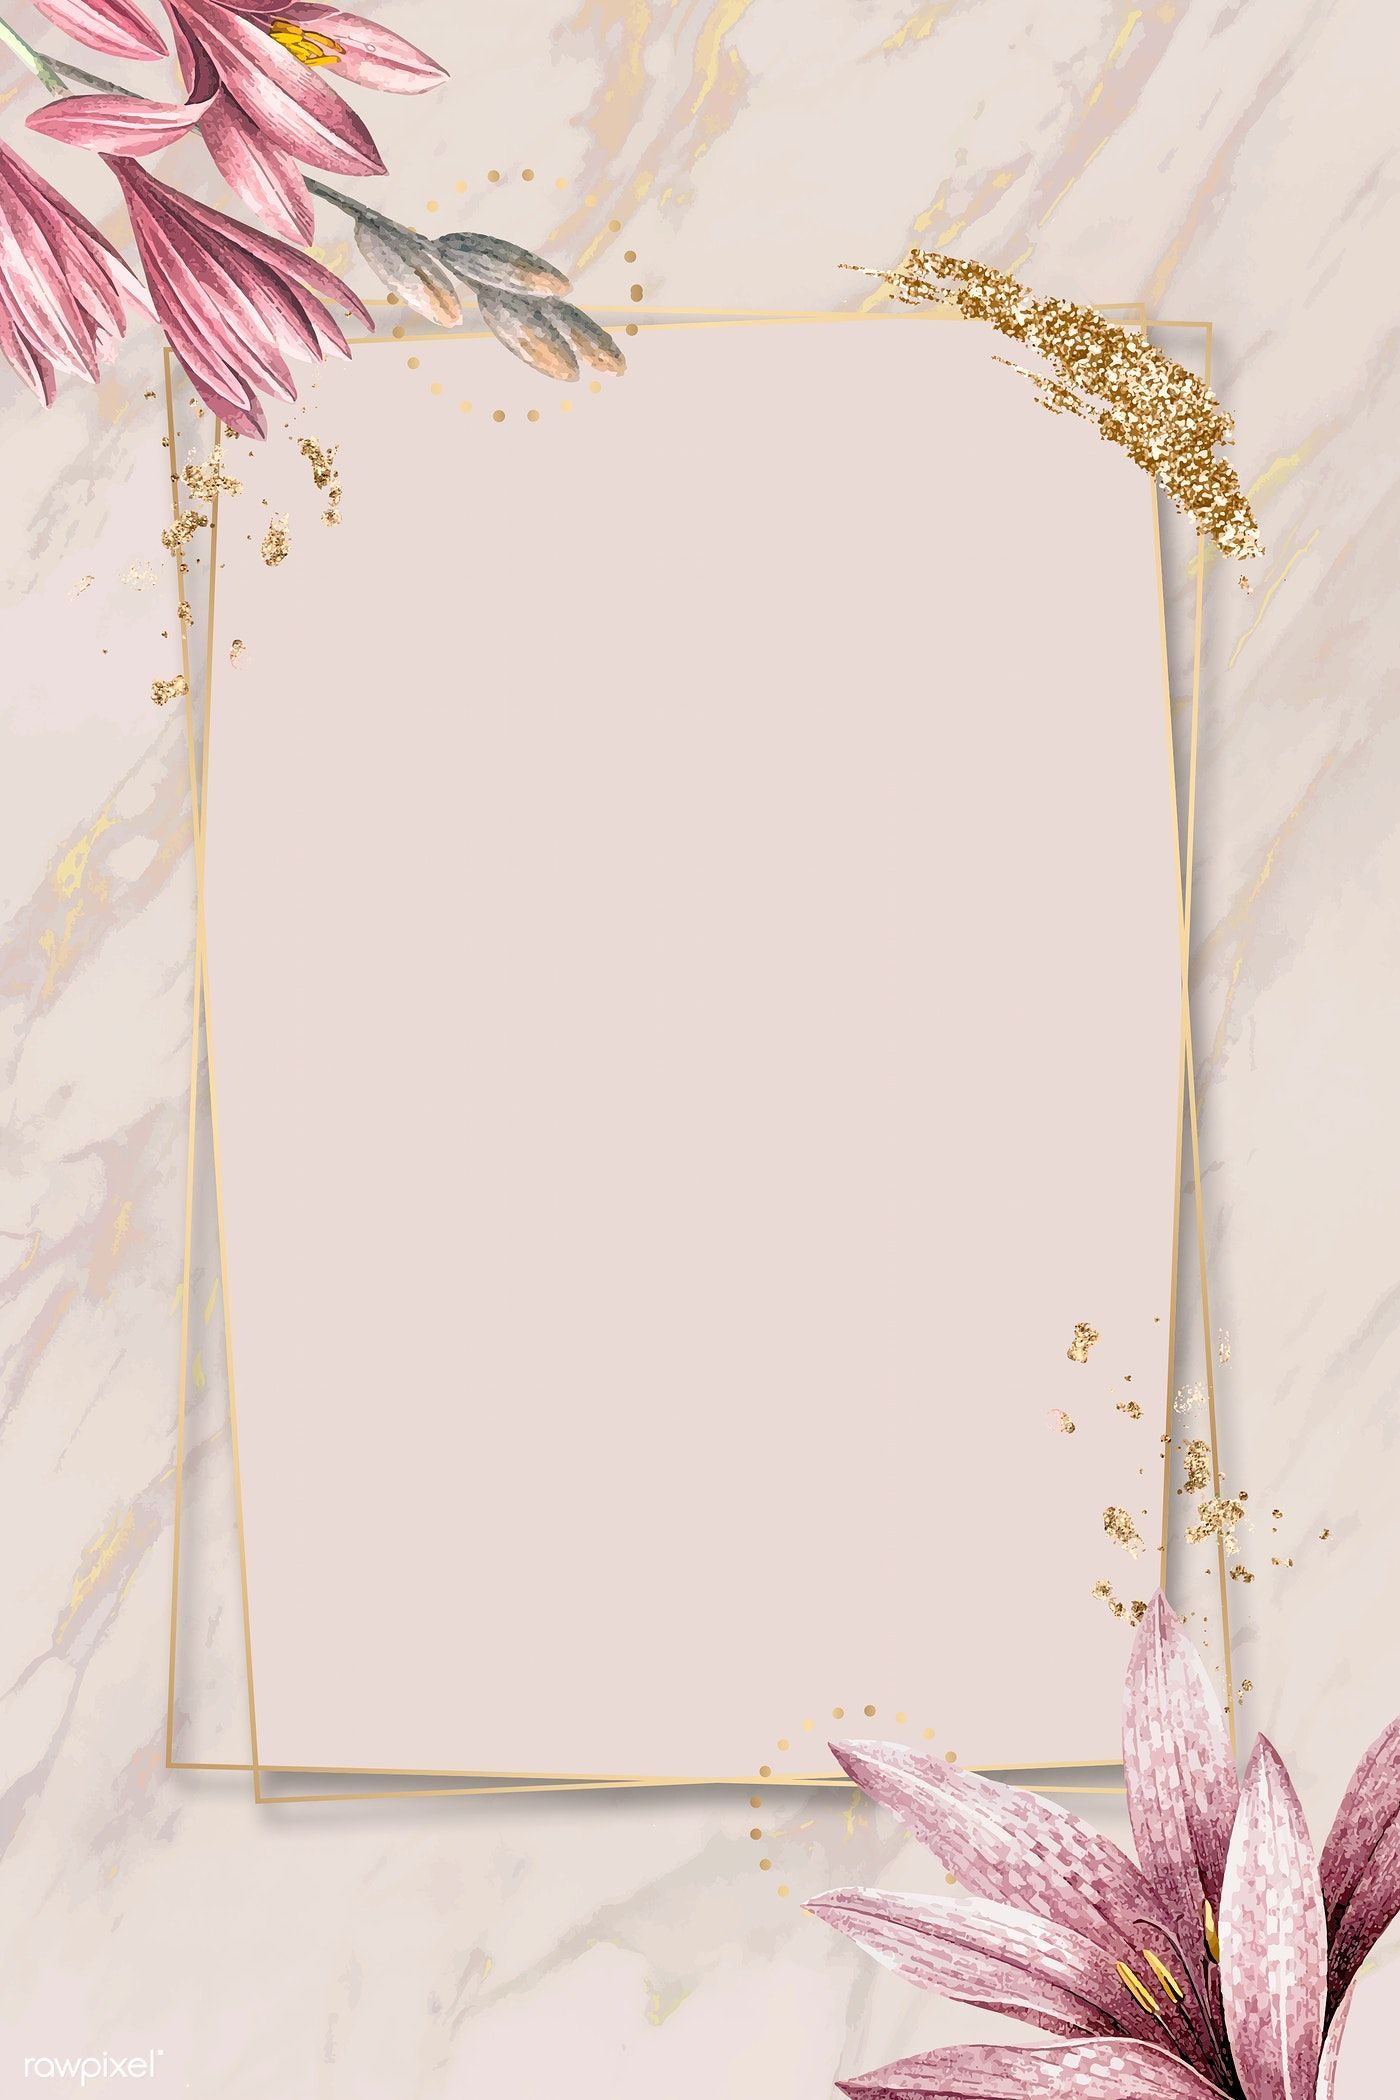 Download premium illustration of Pink amaryllis pattern with gold